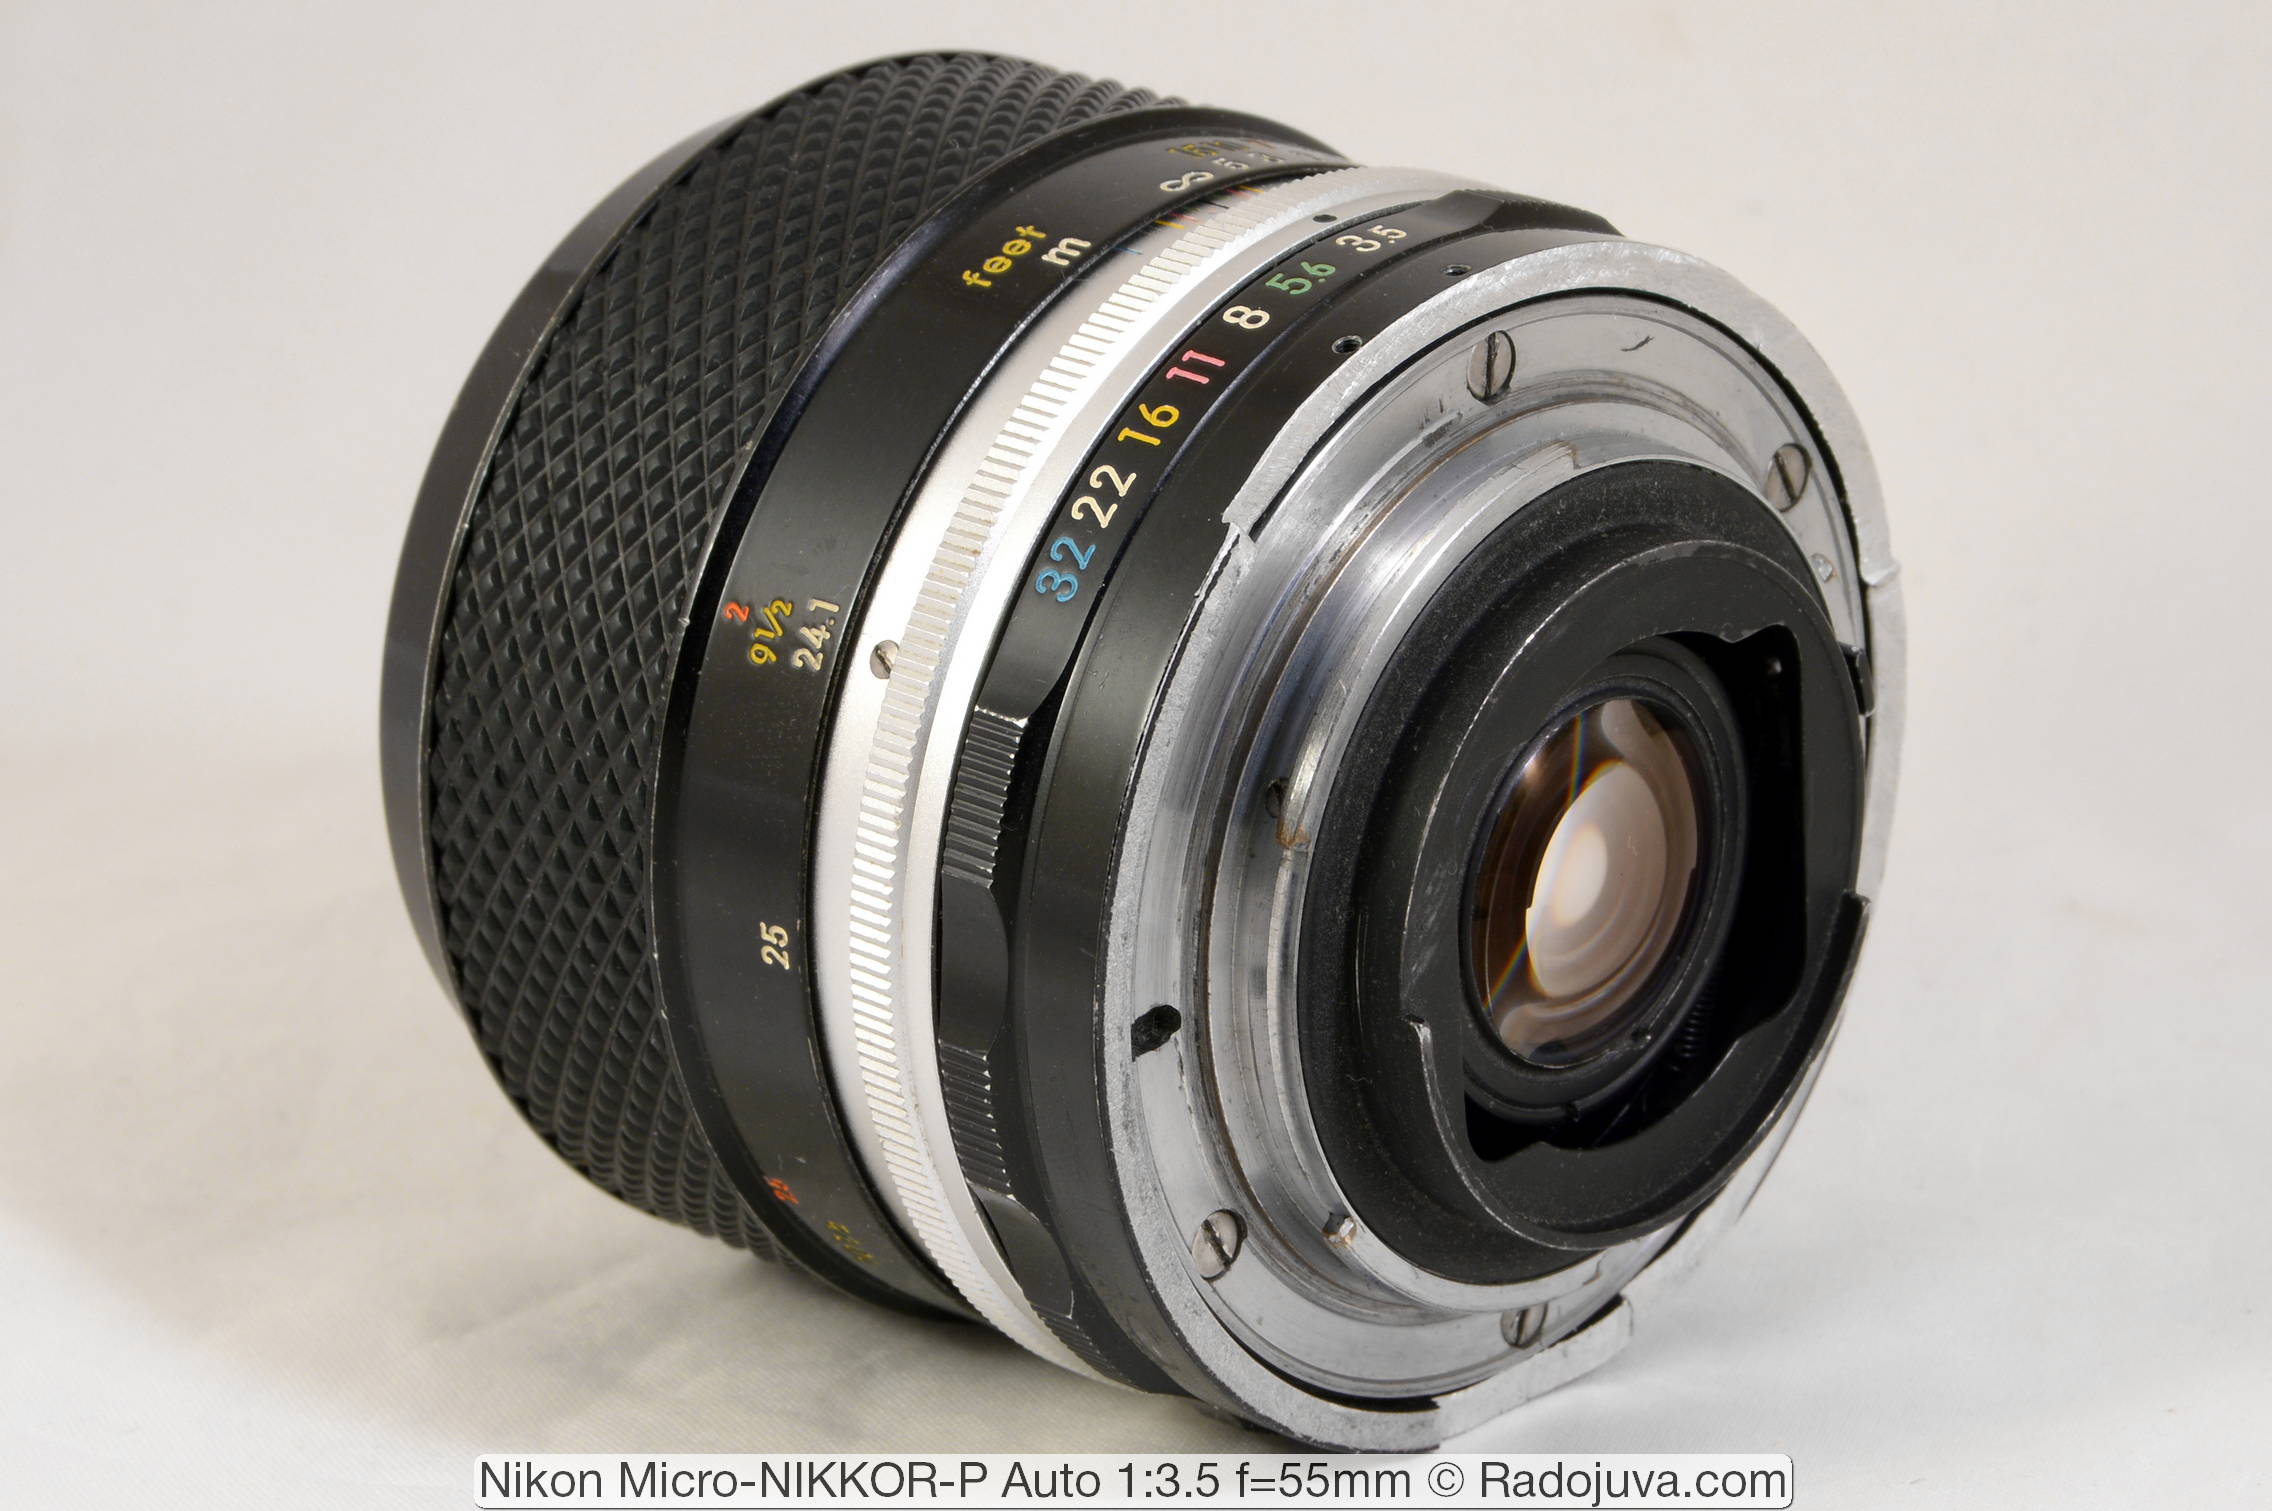 Nikon Micro-NIKKOR-P Auto 1:3.5 f=55mm